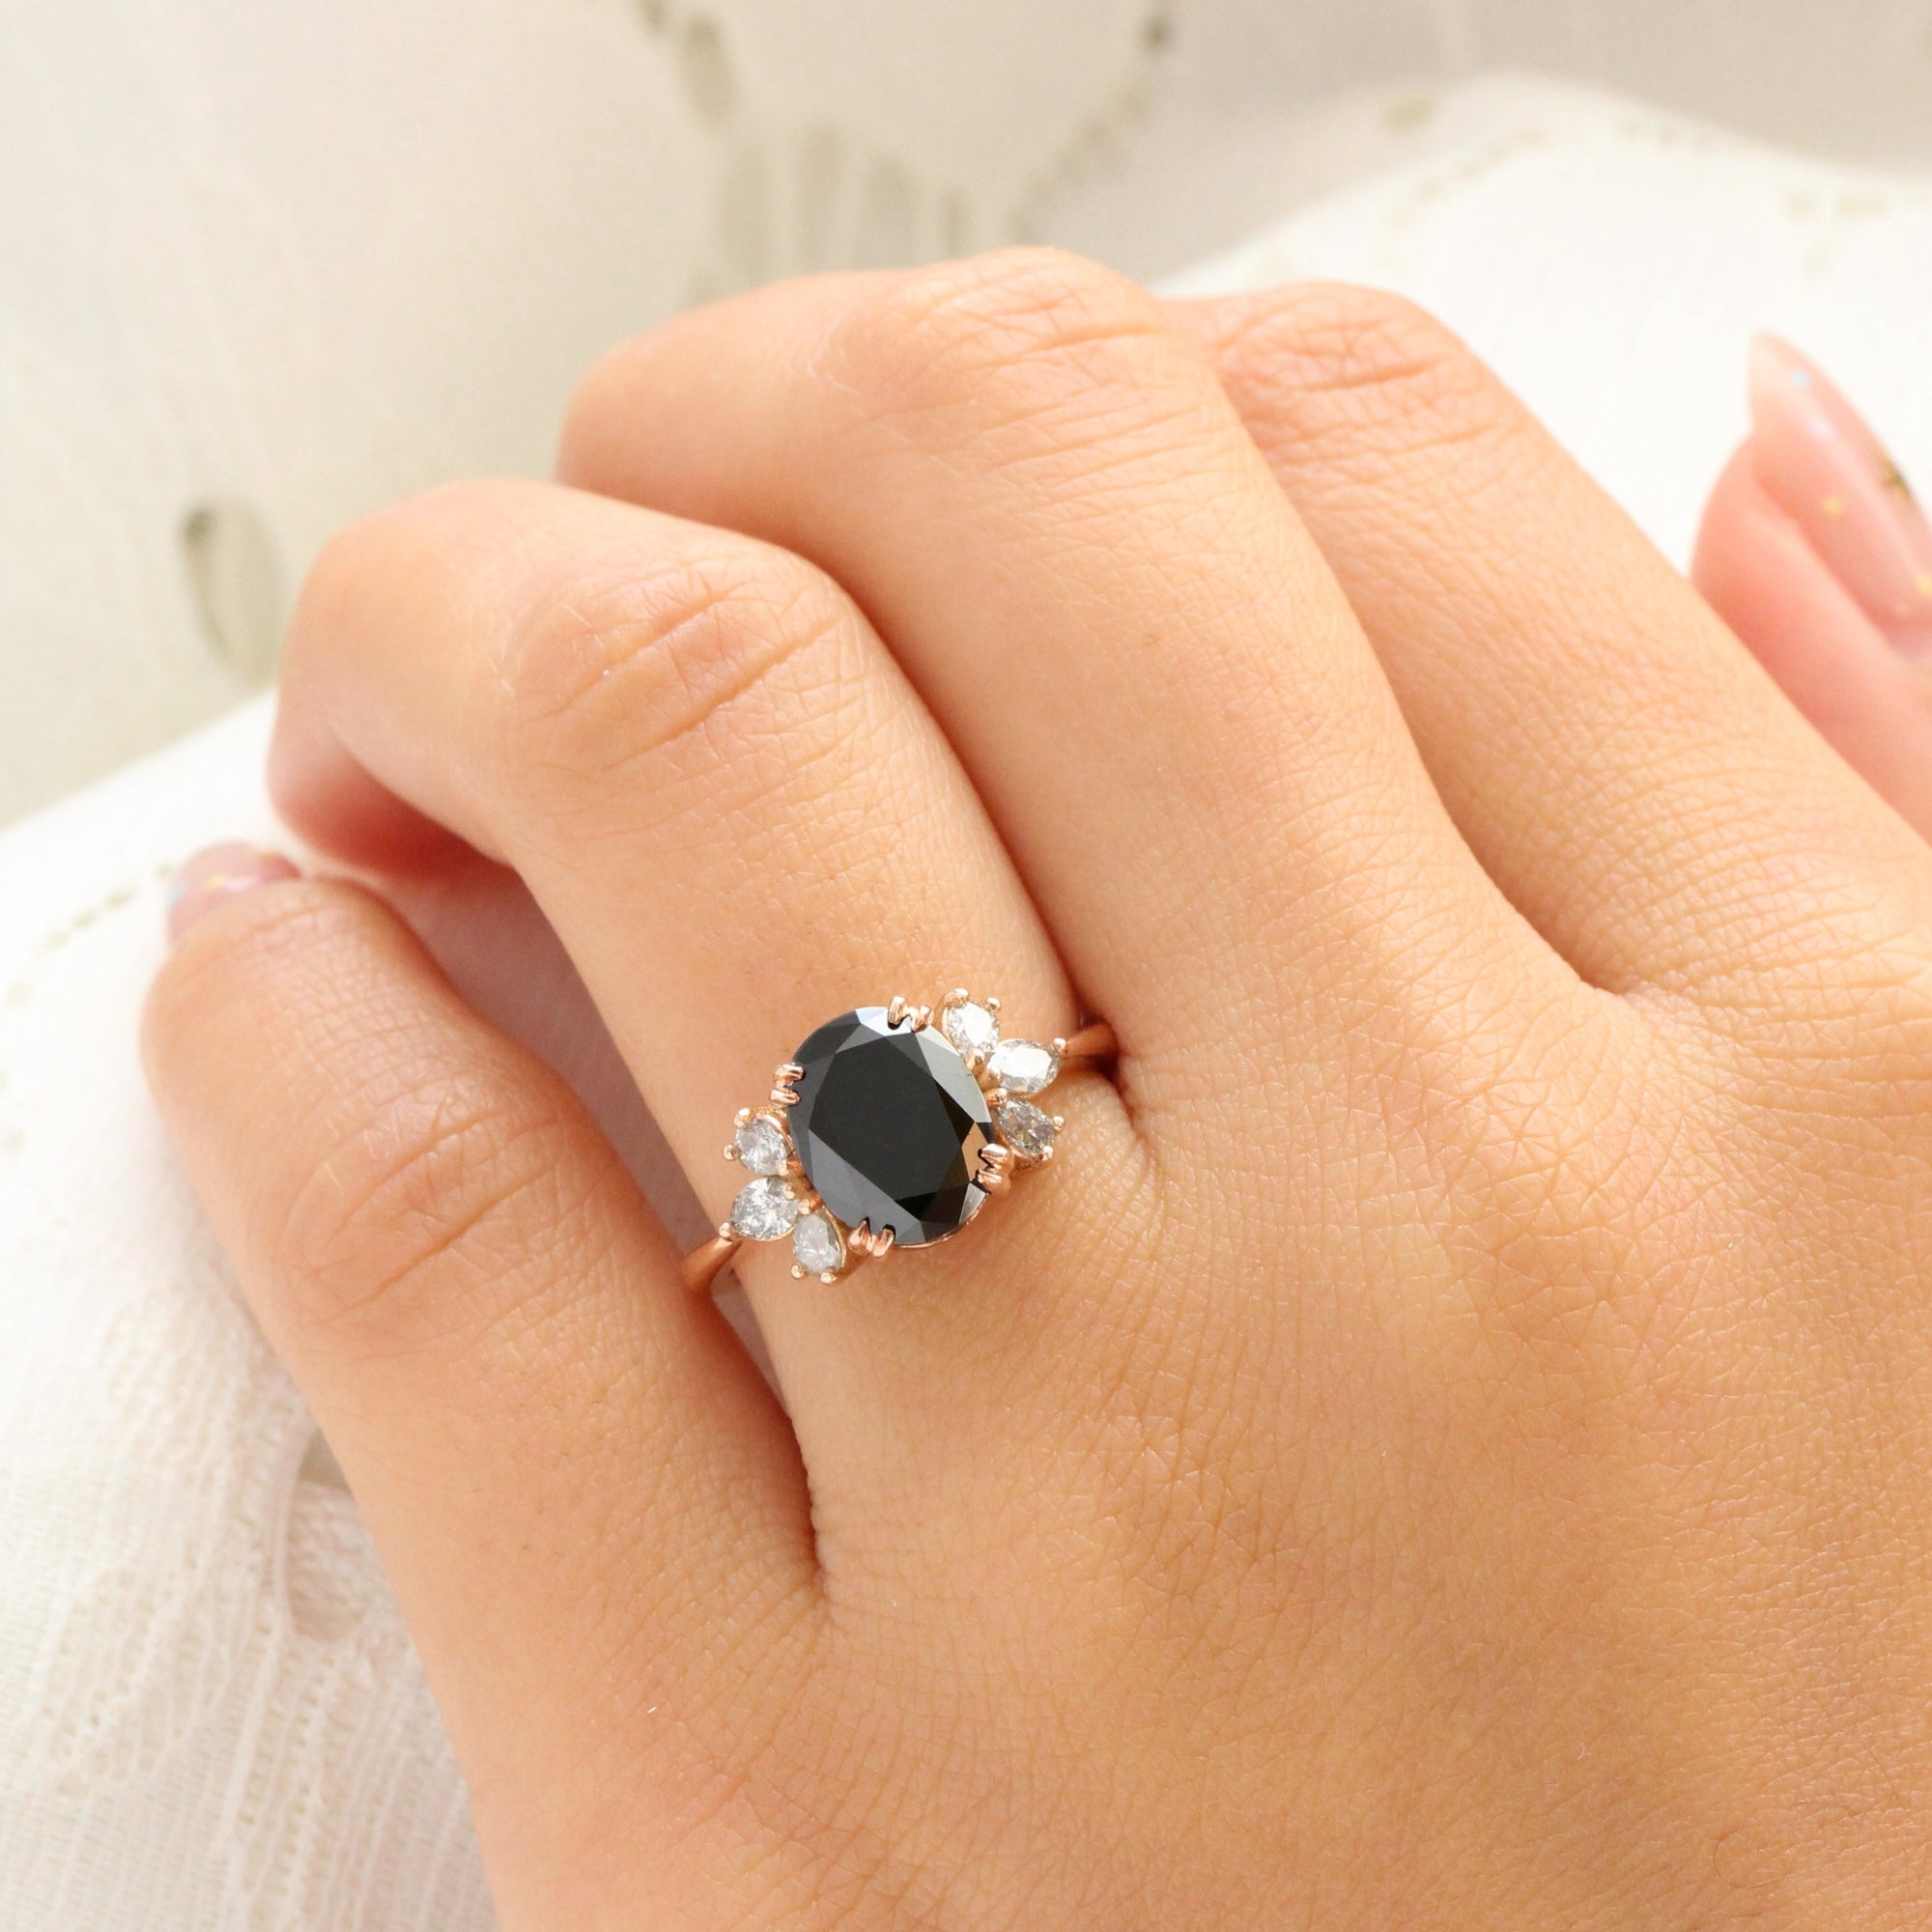 Large oval black diamond ring rose gold 3 stone salt and pepper diamond ring la more design jewelry